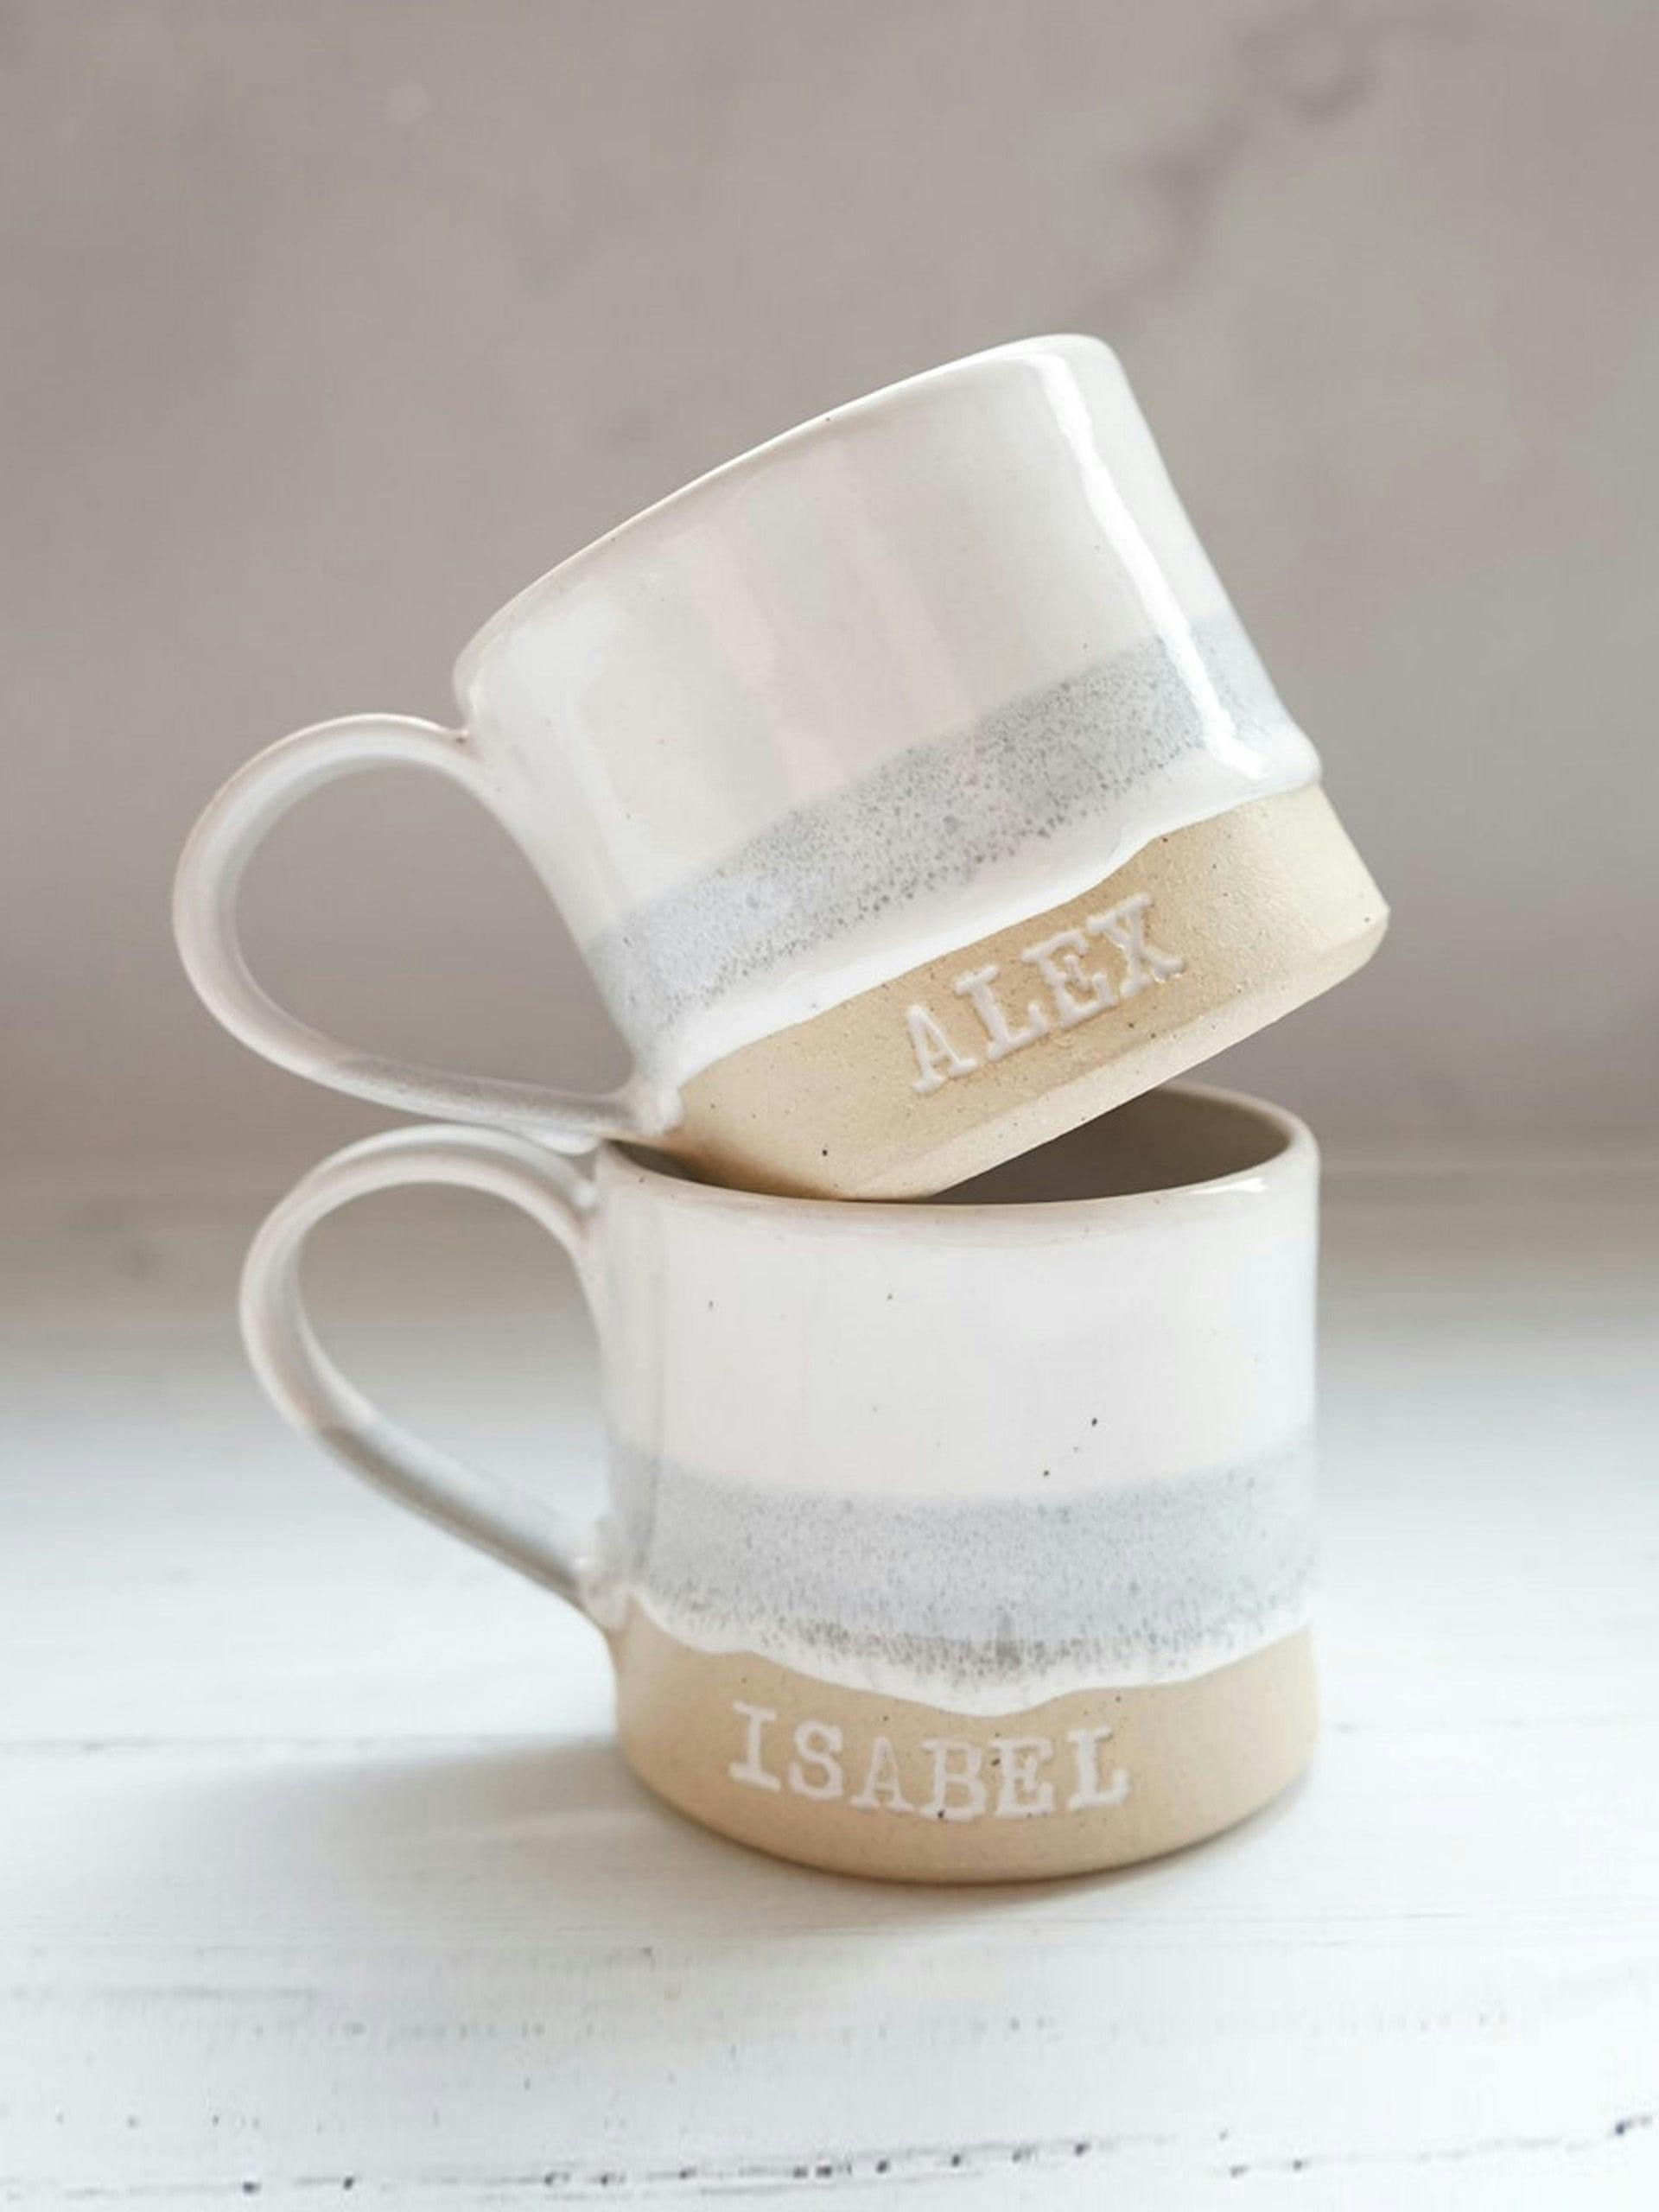 Handmade pottery mug